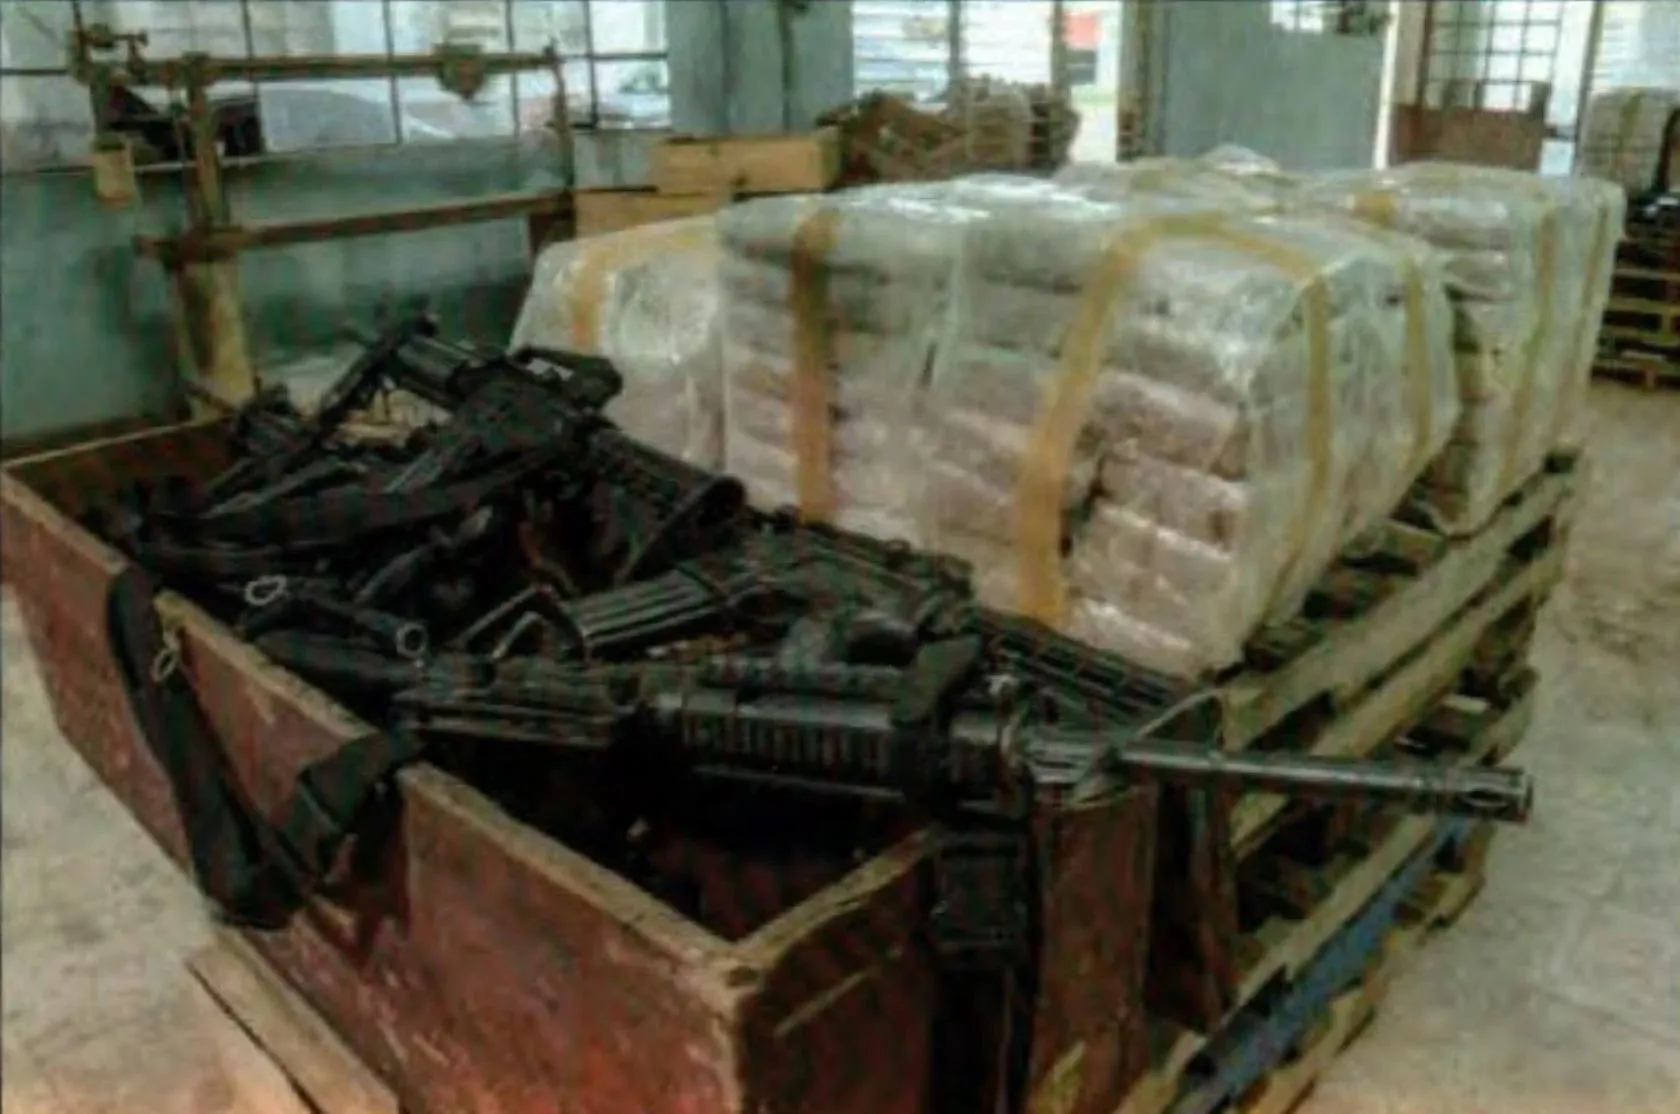 Guns seized from El Chapo and the Sinaloa Cartel